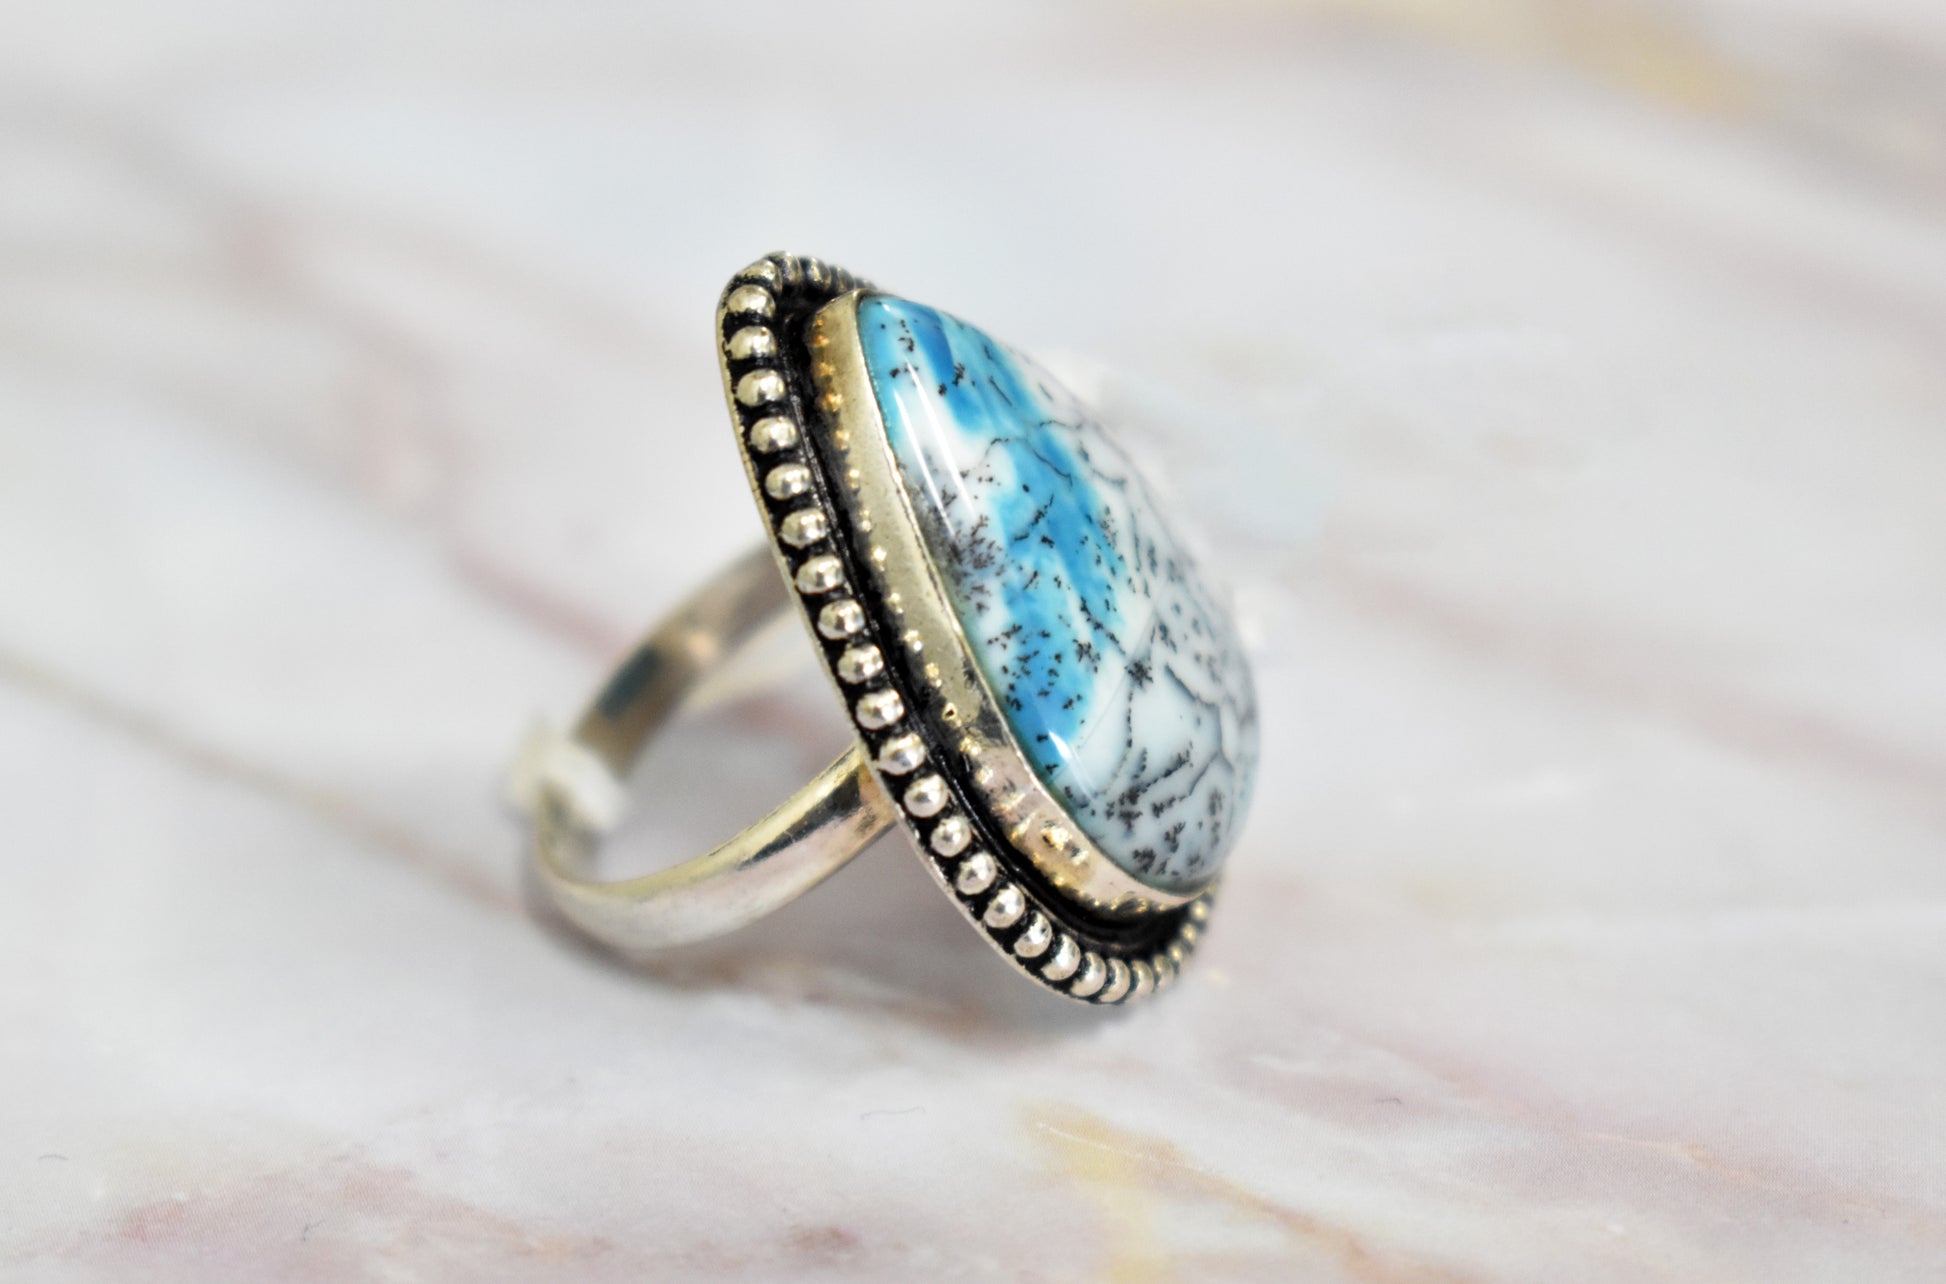 stones-of-transformation - Sky Blue Dendritic Agate Ring (Size 9.5) - Stones of Transformation - 